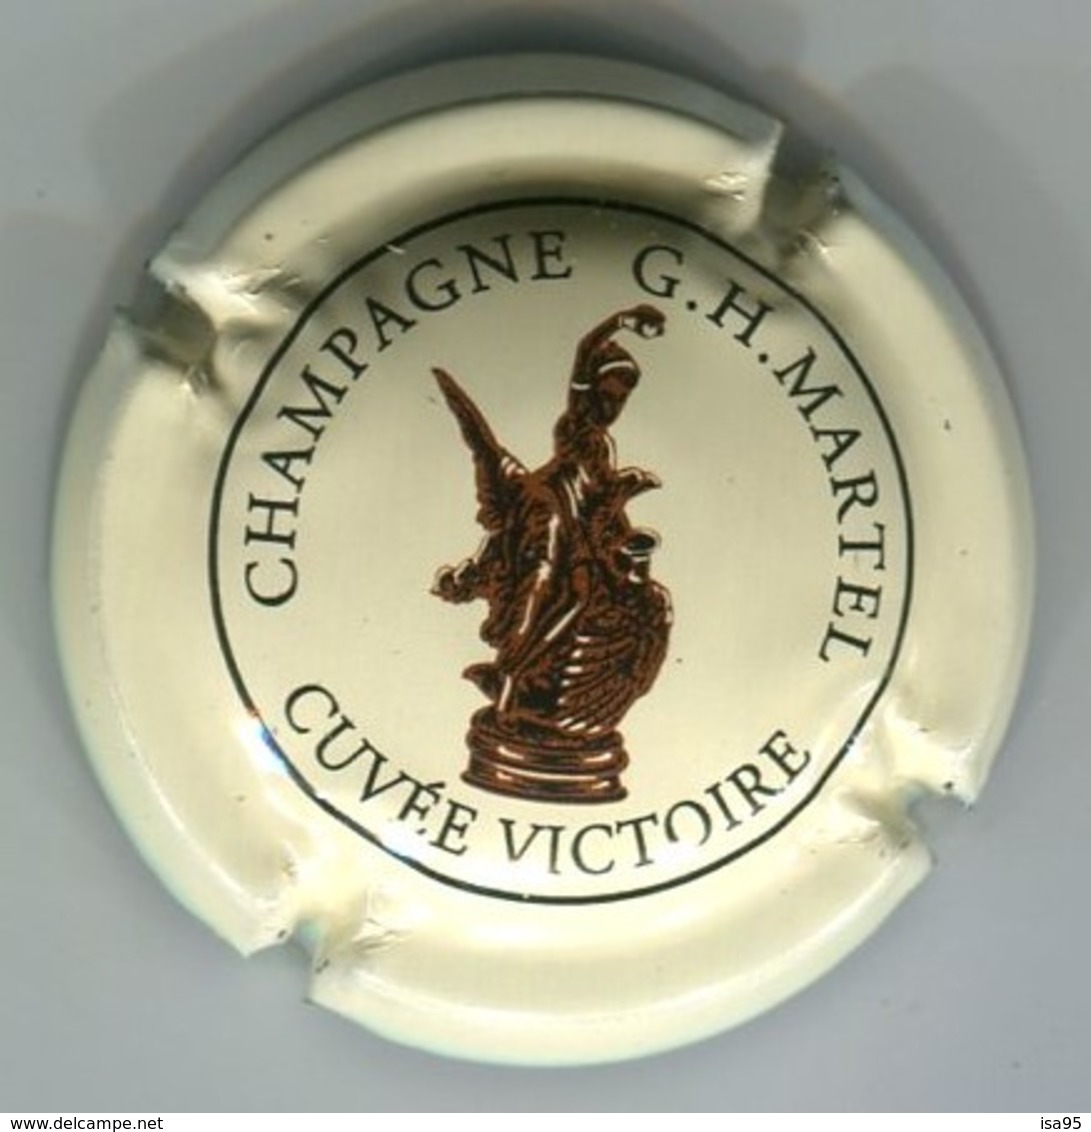 CAPSULE-CHAMPAGNE MARTEL GH N°24b Cuvée Victoire - Martel GH